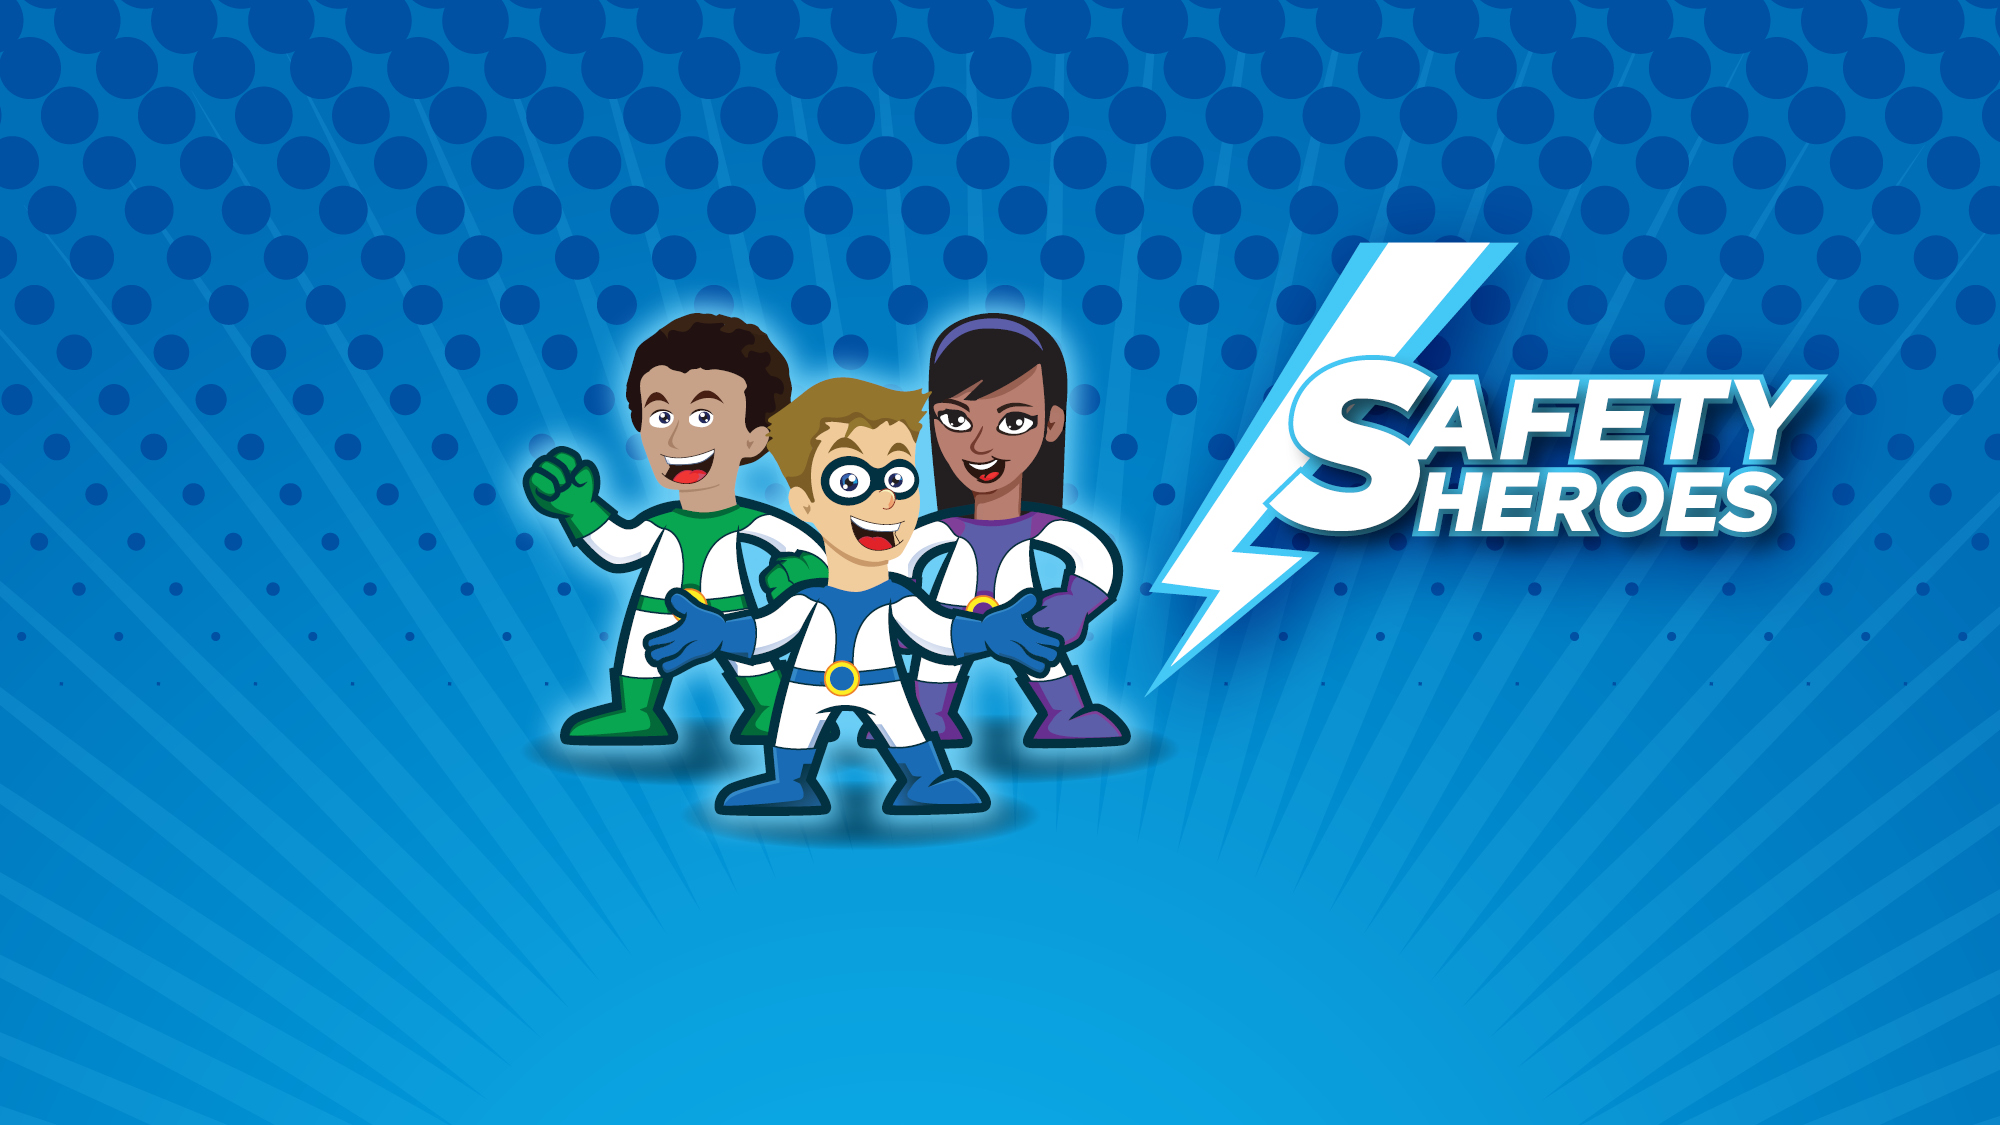 3 cartoon kids dressed up as safety heroes